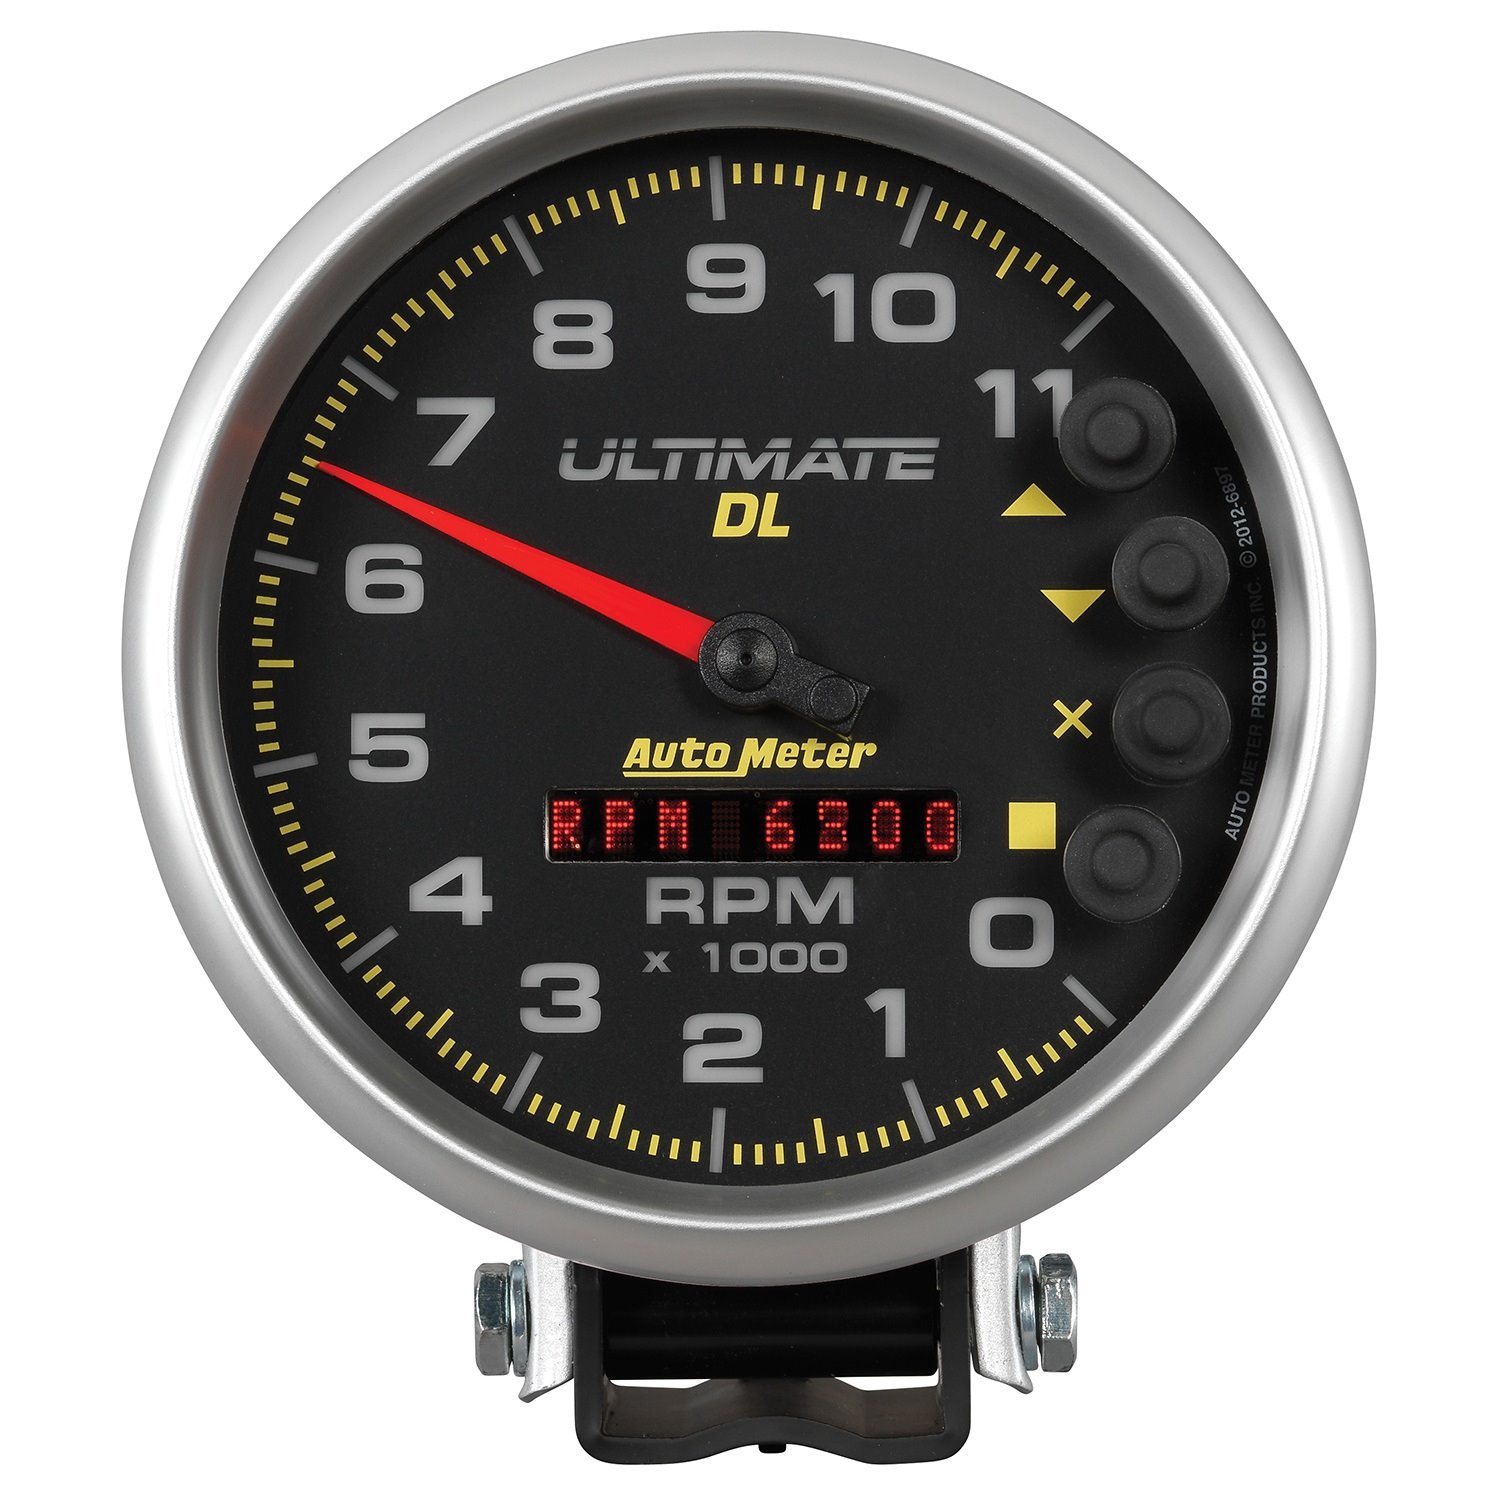 Ultimate DL Tachometer 11,000 RPM